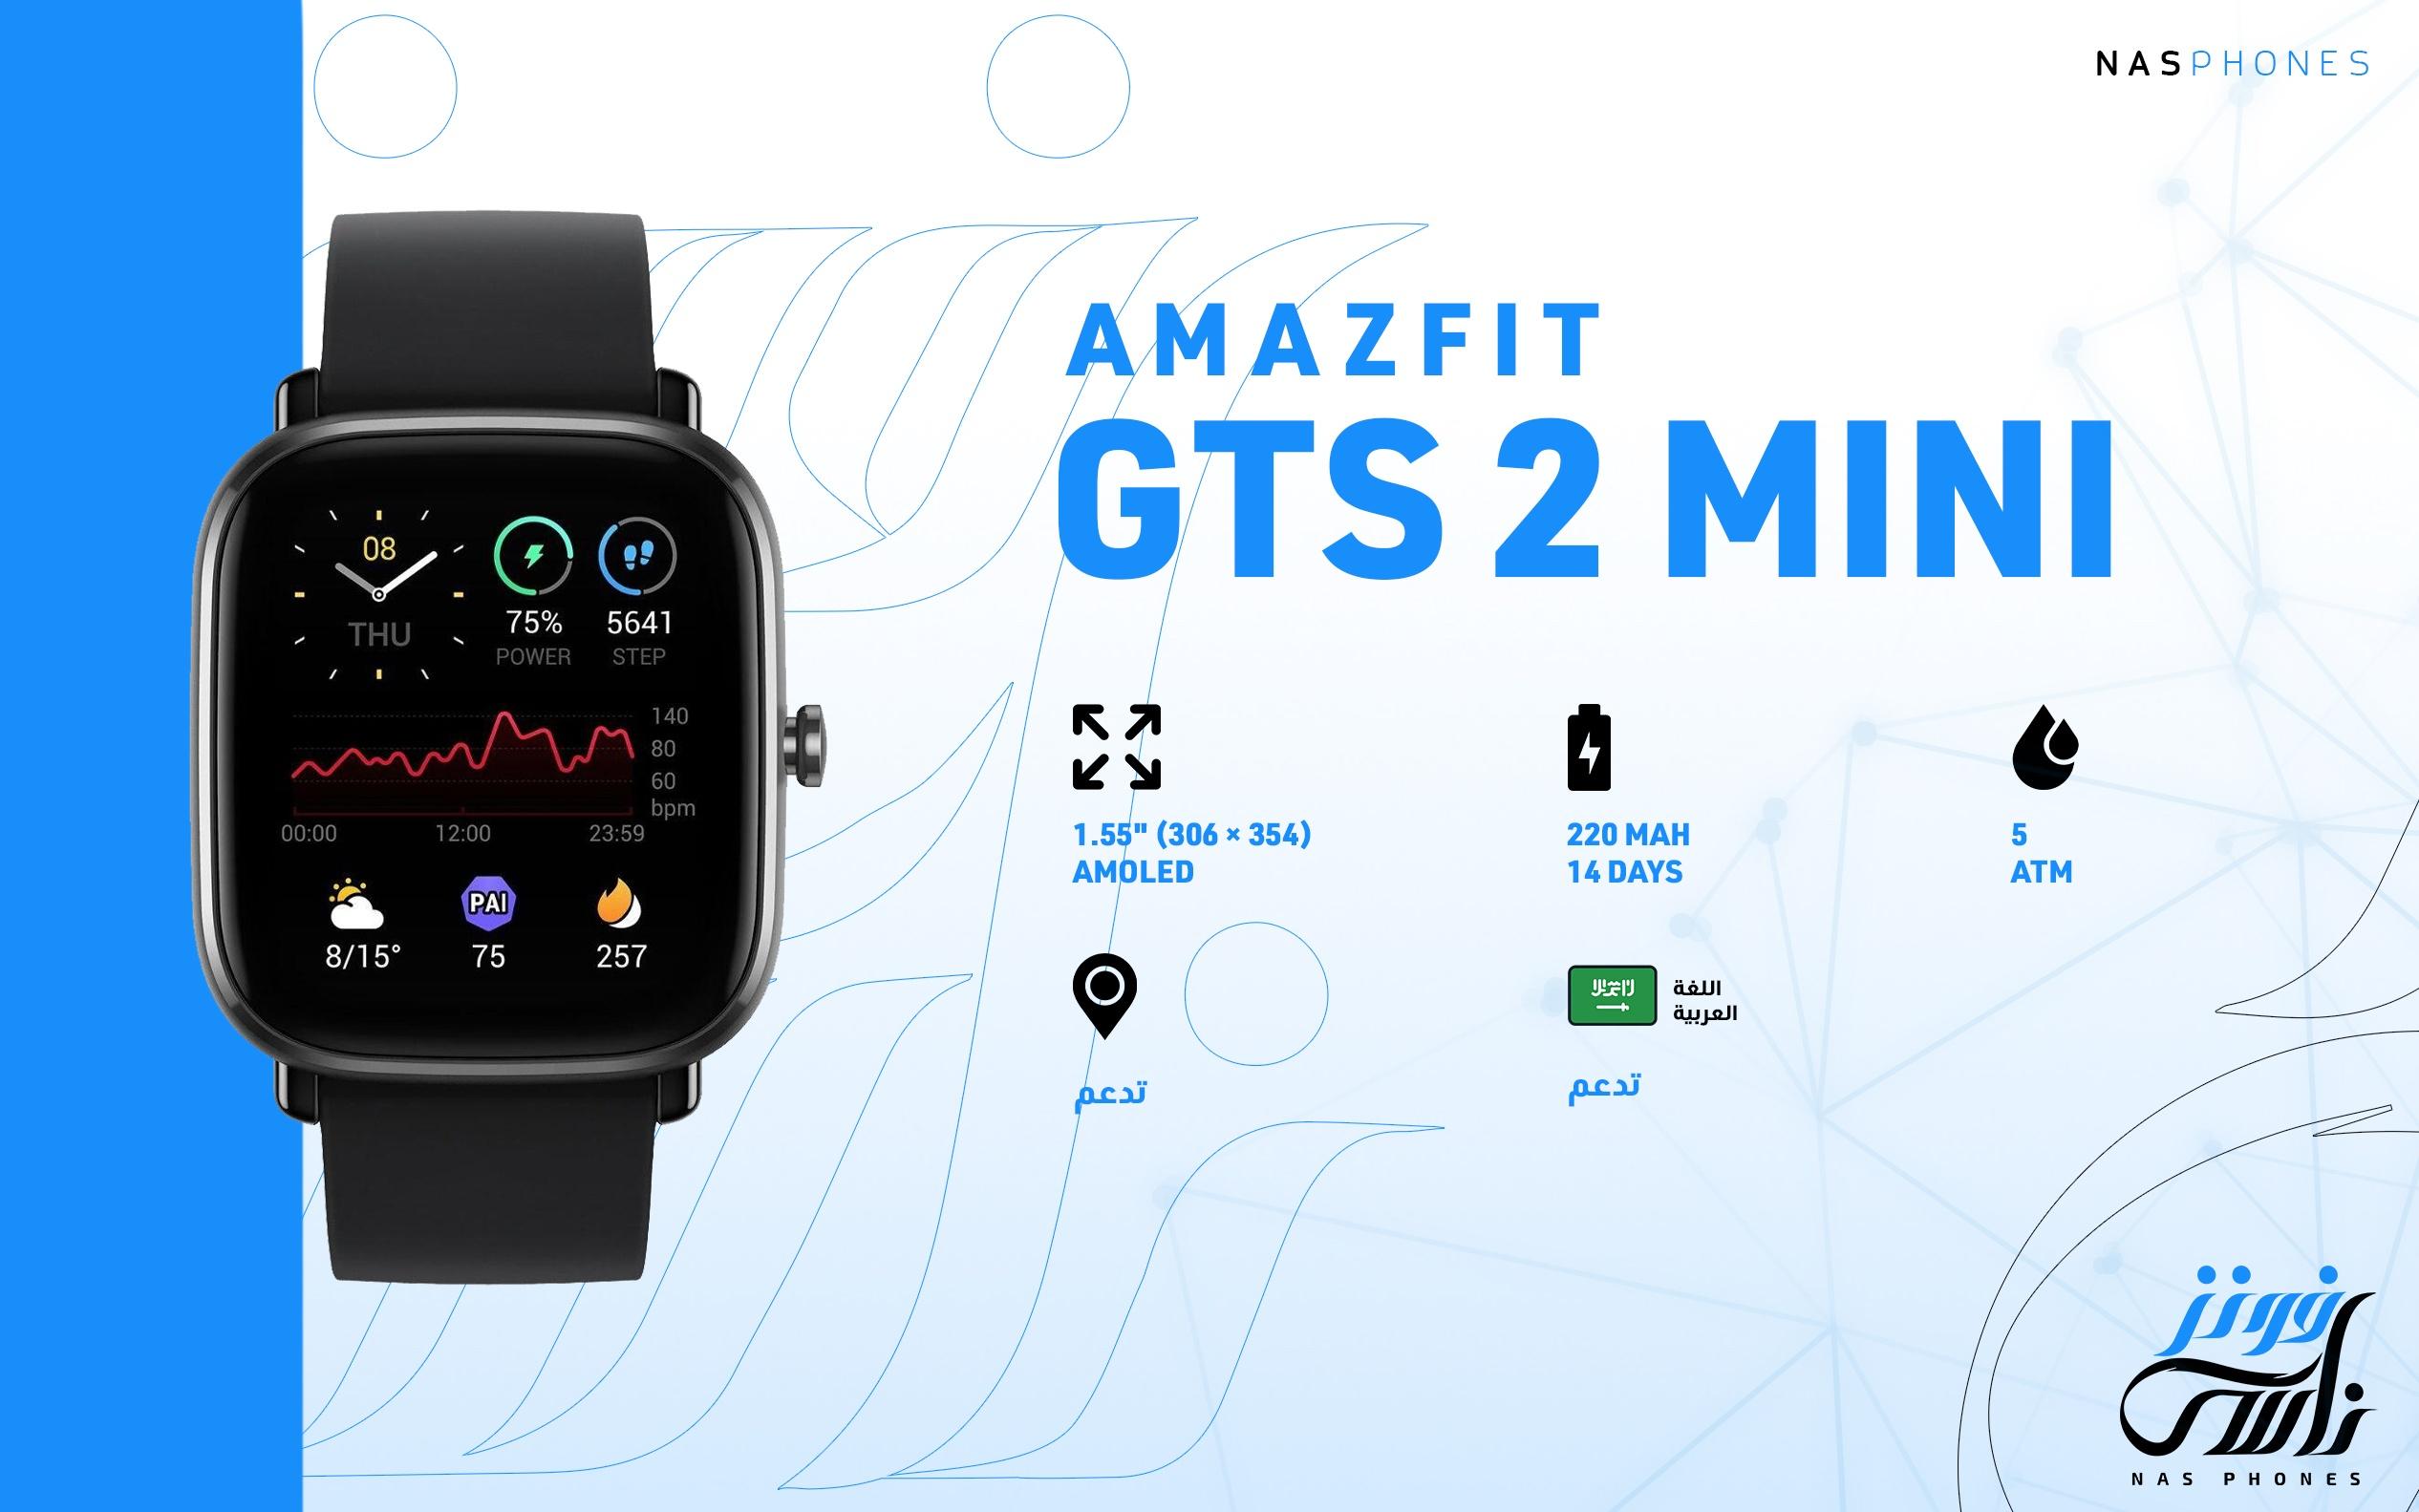 Amazfit GTS 2 mini